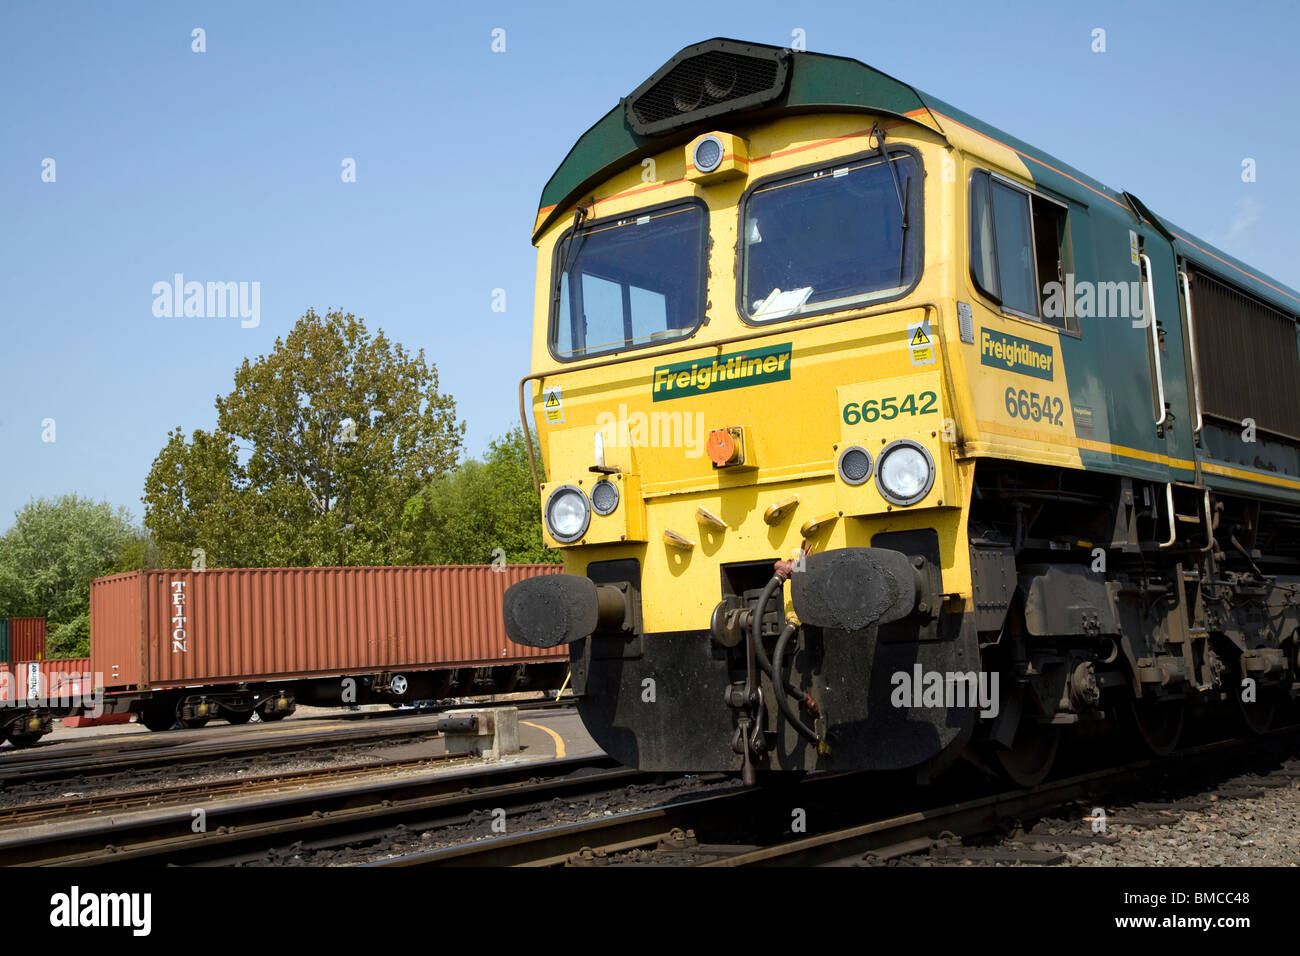 Freightliner train engine, Rail freight terminal, Port of Felixstowe, Suffolk Stock Photo